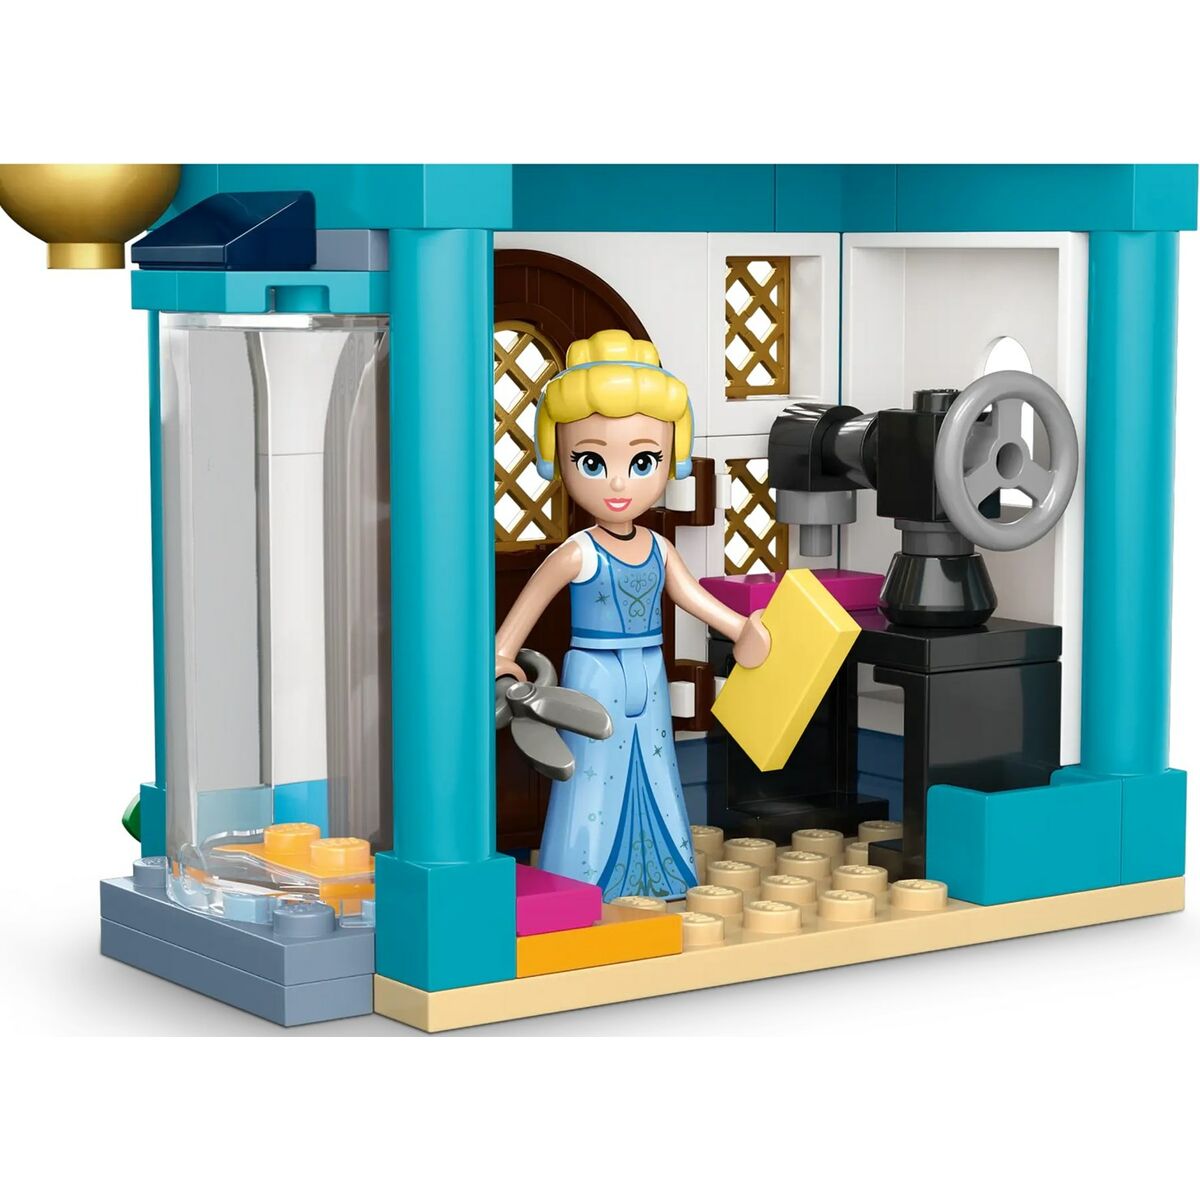 Playset Lego 43246 Disney Princess Market Adventure - Disponibile in 3-4 giorni lavorativi